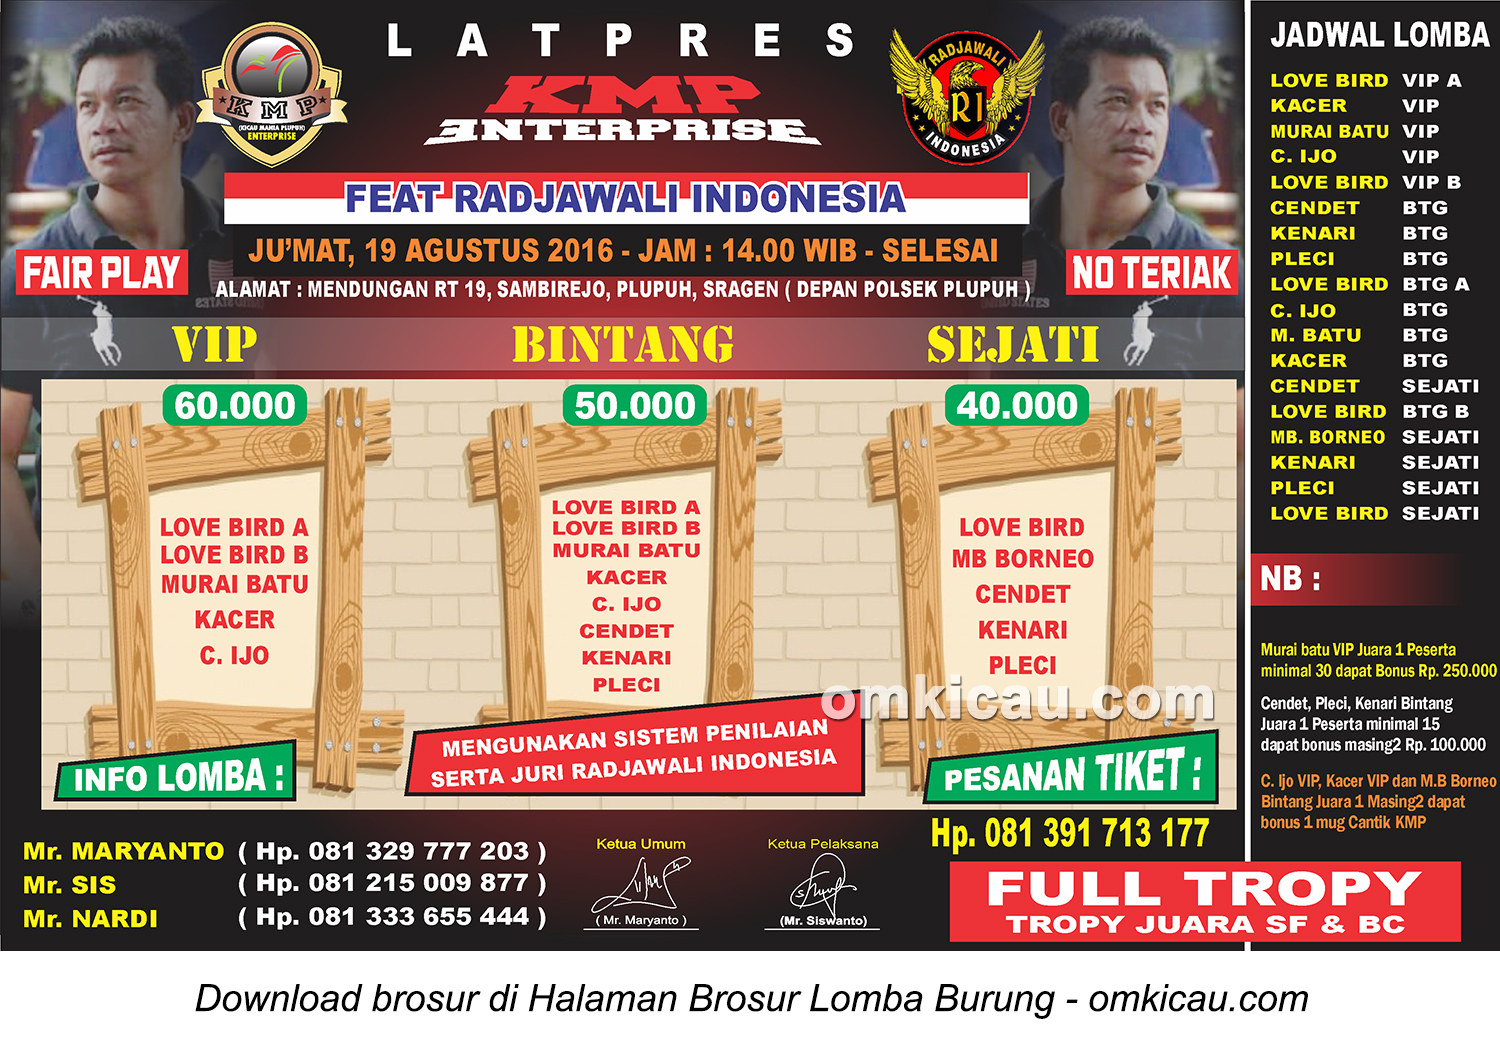 Brosur Revisi Latpres KMP Enterprise feat Radjawali Indonesia, Sragen, 19 Agustus 2016